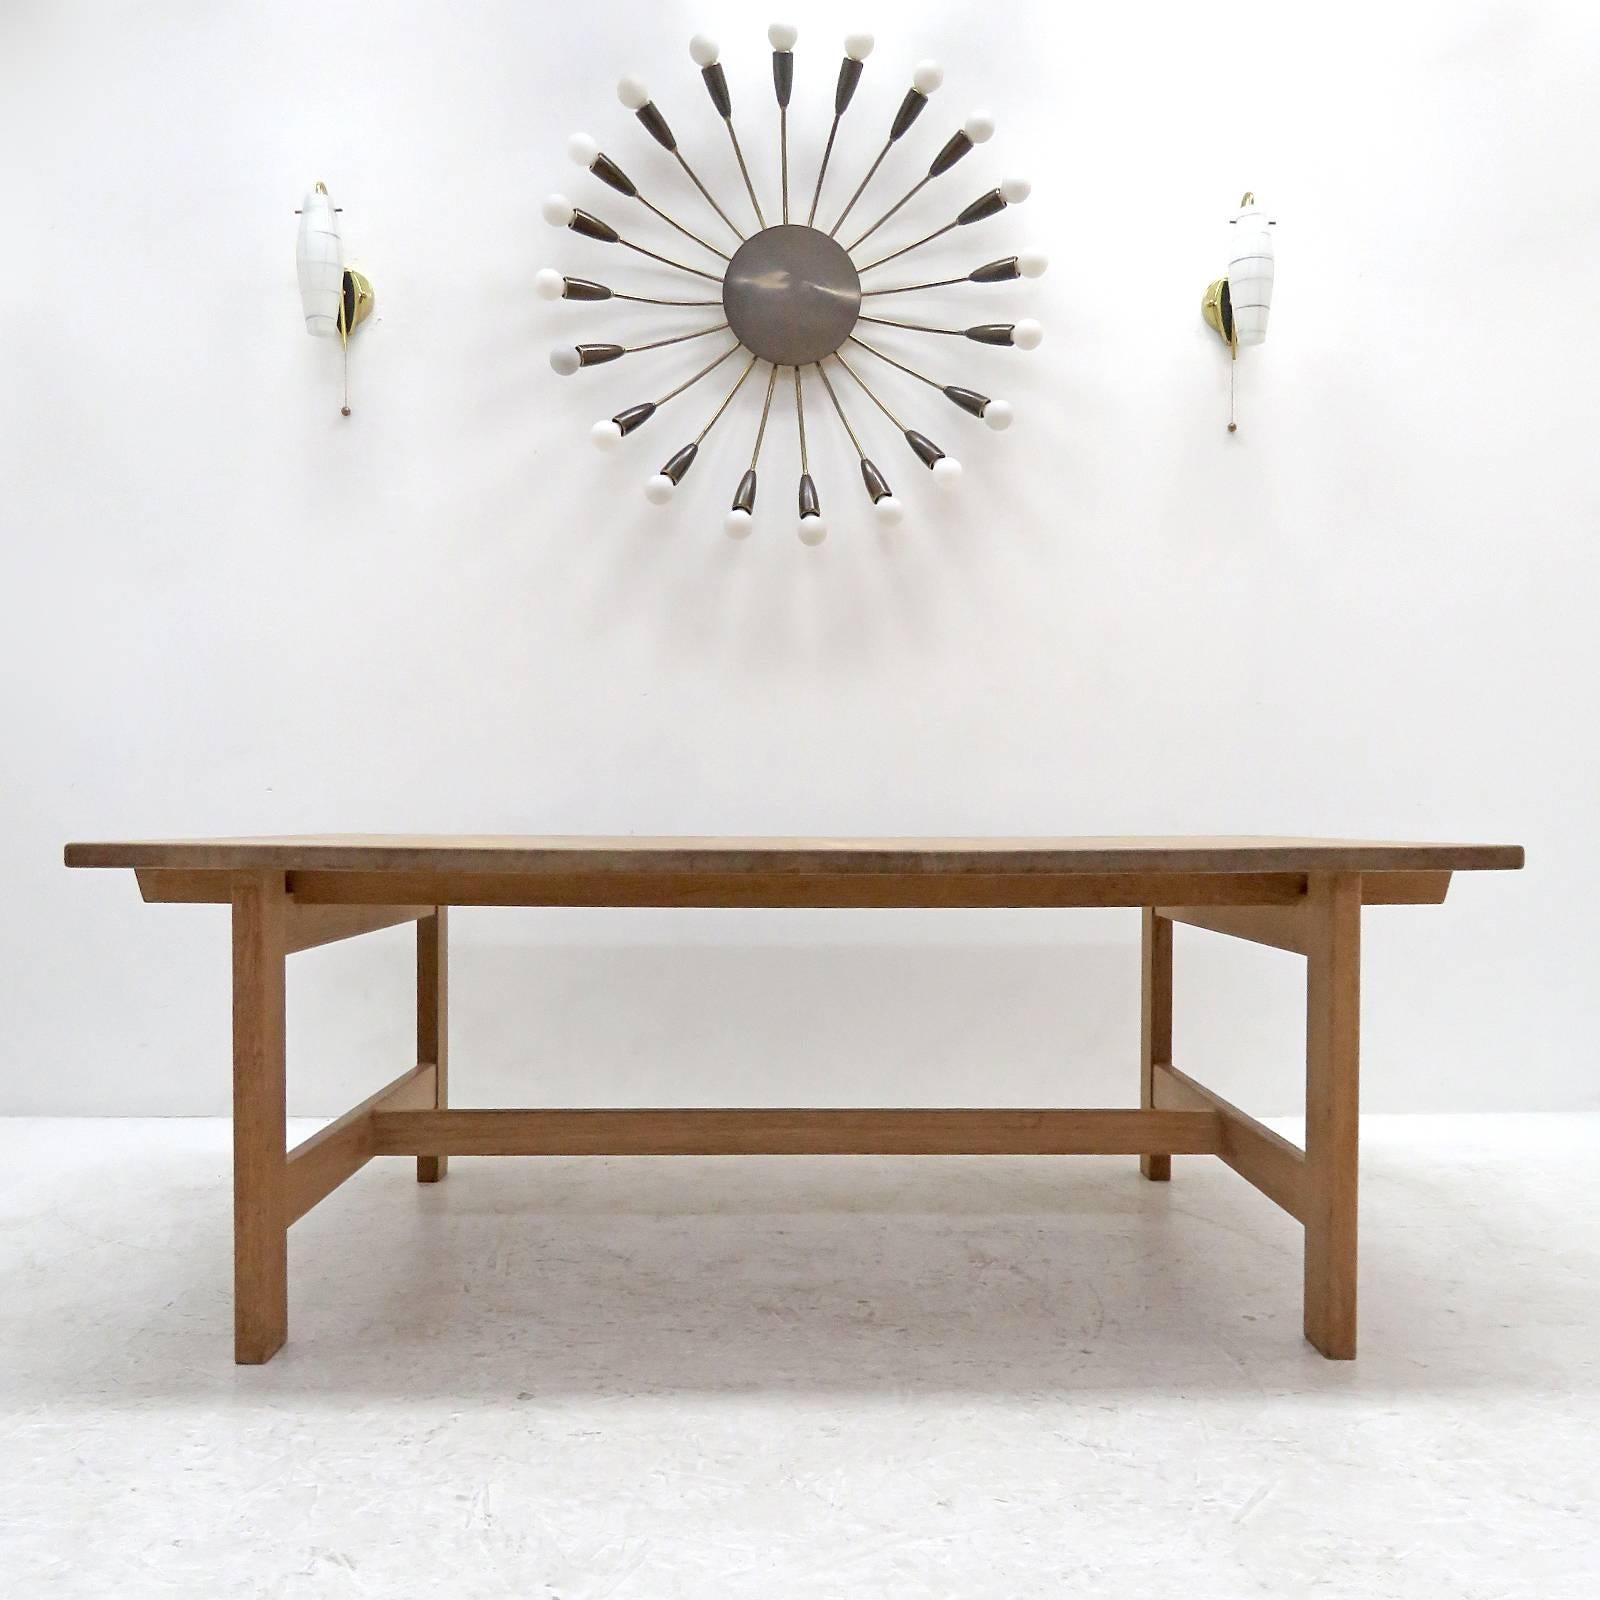 Bold Danish modern, solid oak coffee table by Kurt Østervig for KP Möbler, 1965, oversized, sturdy oak frame in great condition.